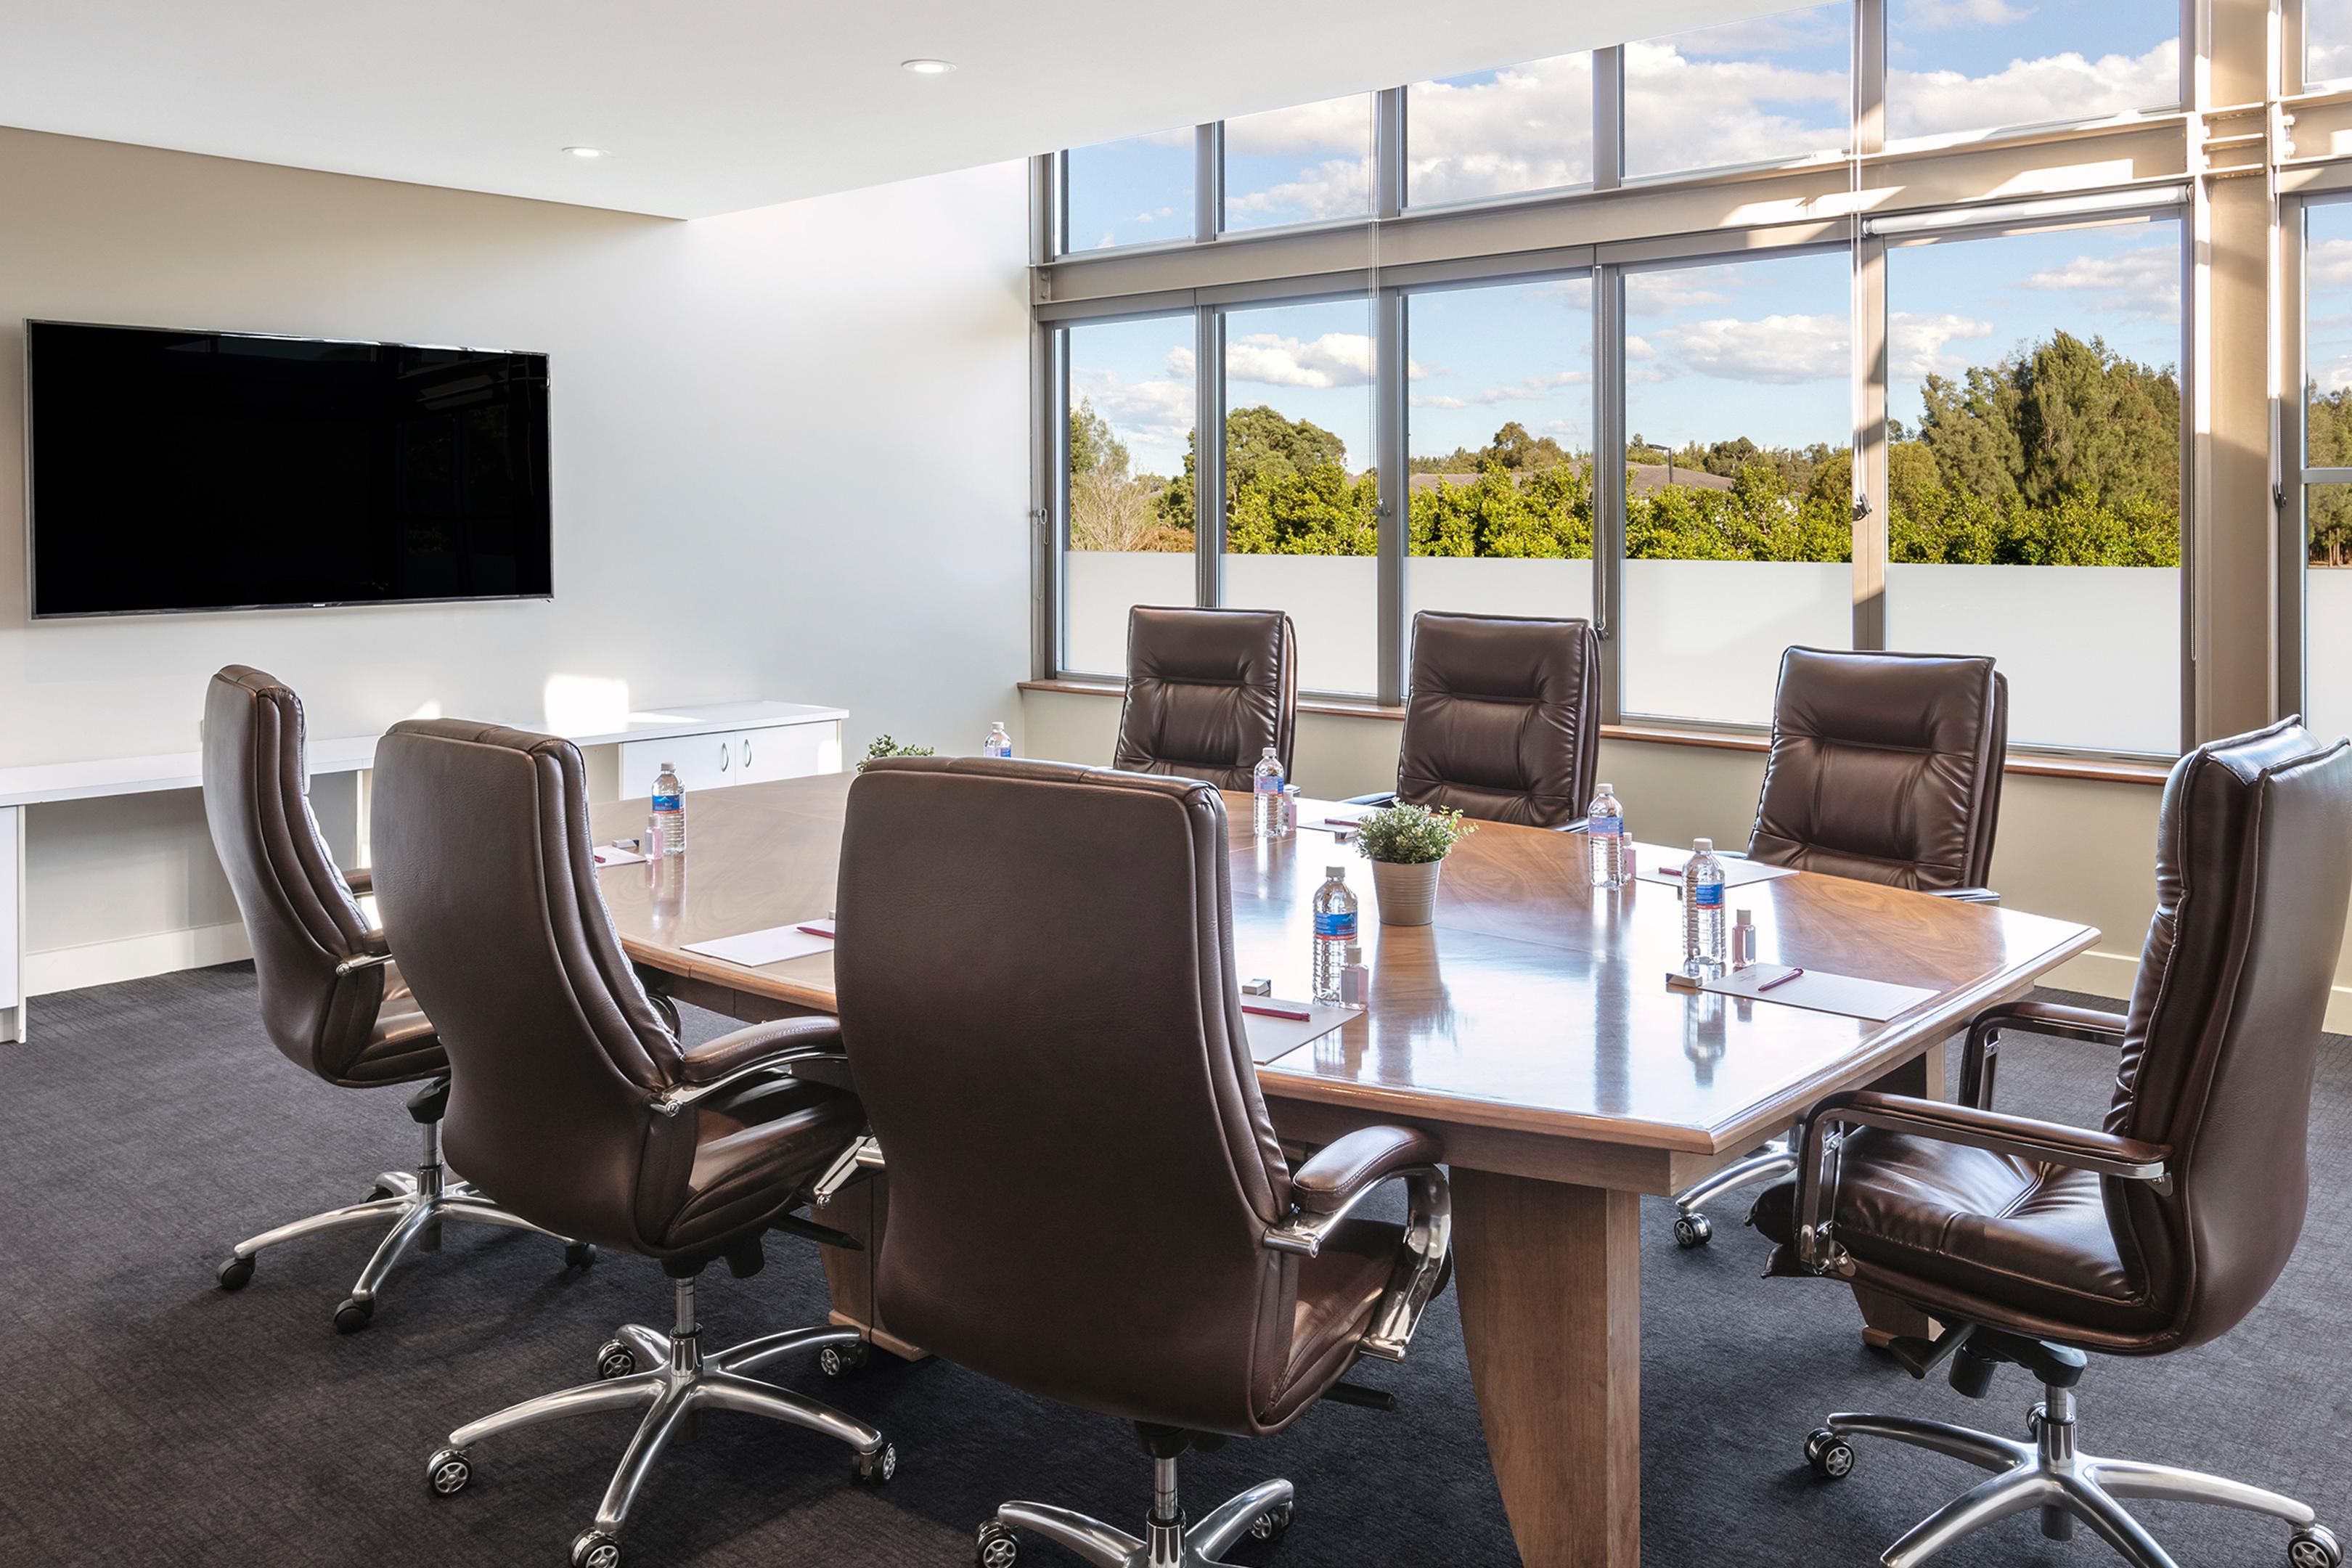 Chardonnay Meeting Room - boardroom configuration